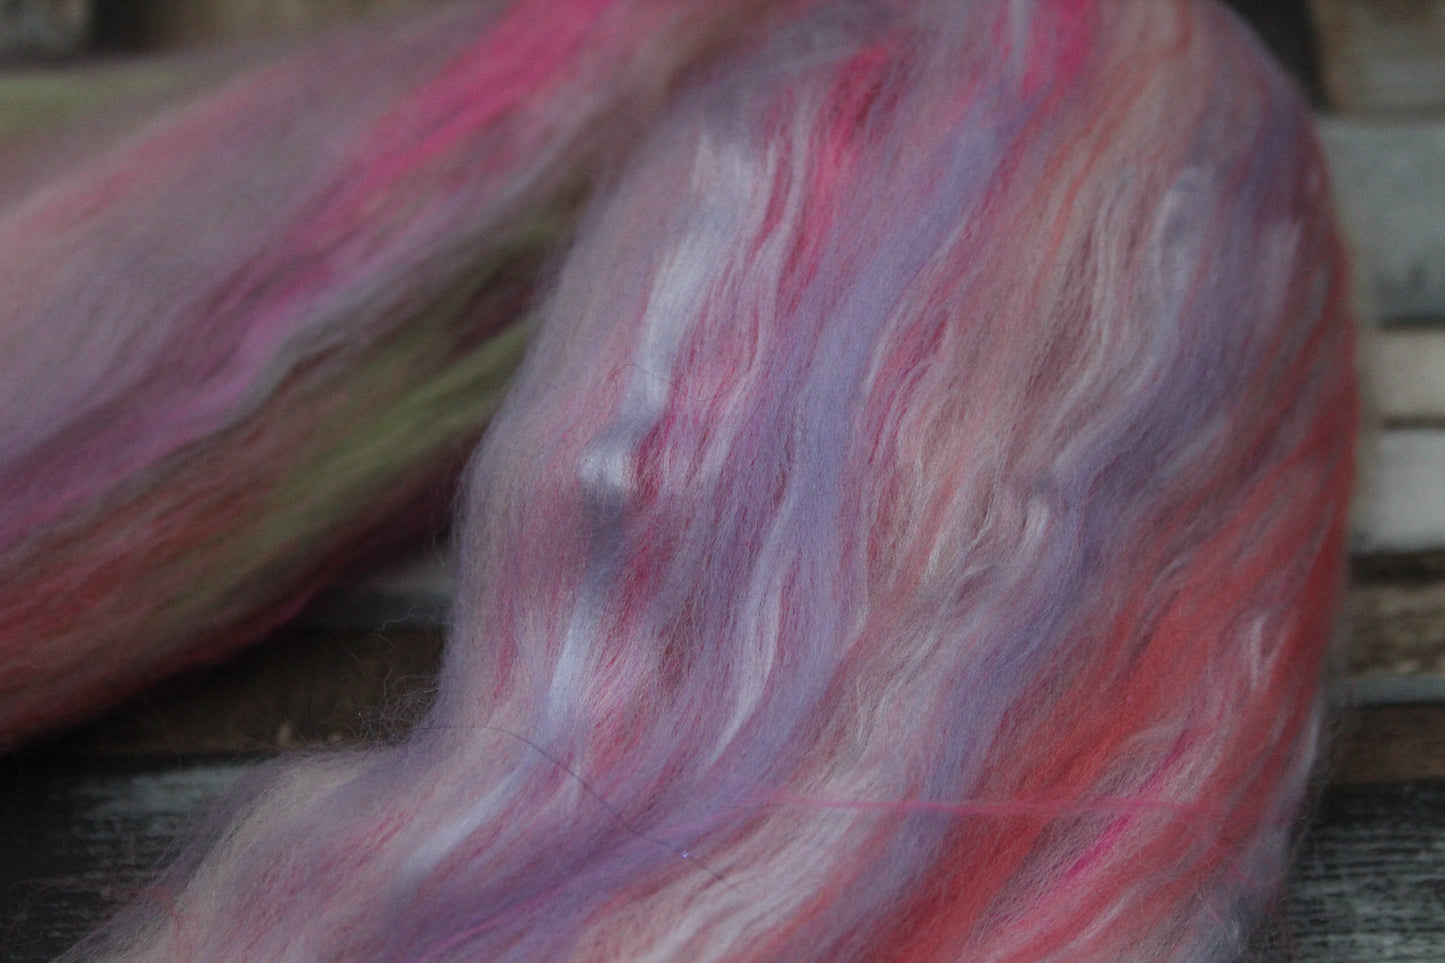 Merino Wool Blend - Purple Pink - 21 grams / 0.7 oz  - Fibre for felting, weaving or spinning